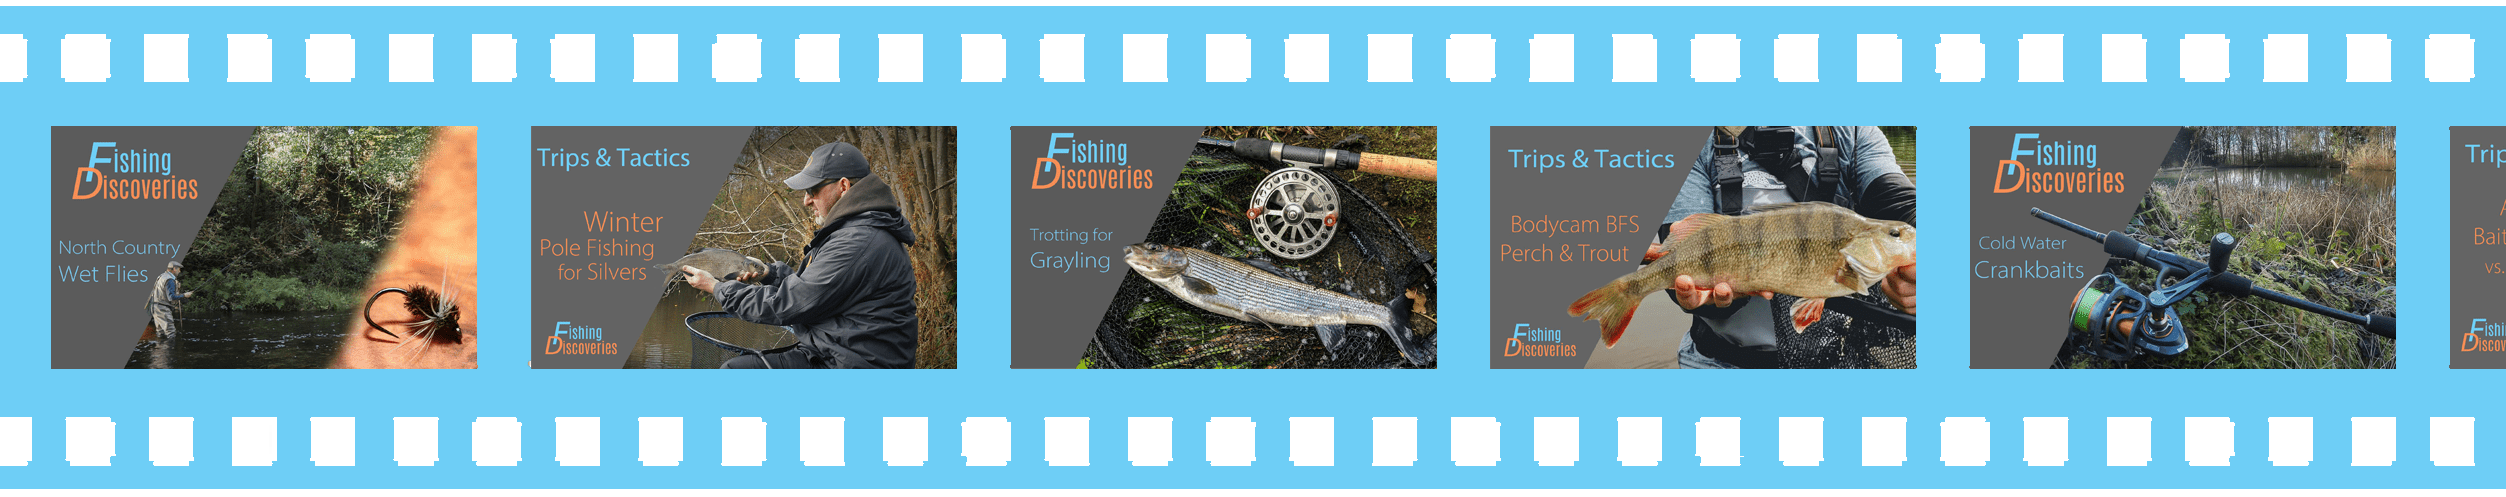 Fishing Discoveries Film Strip